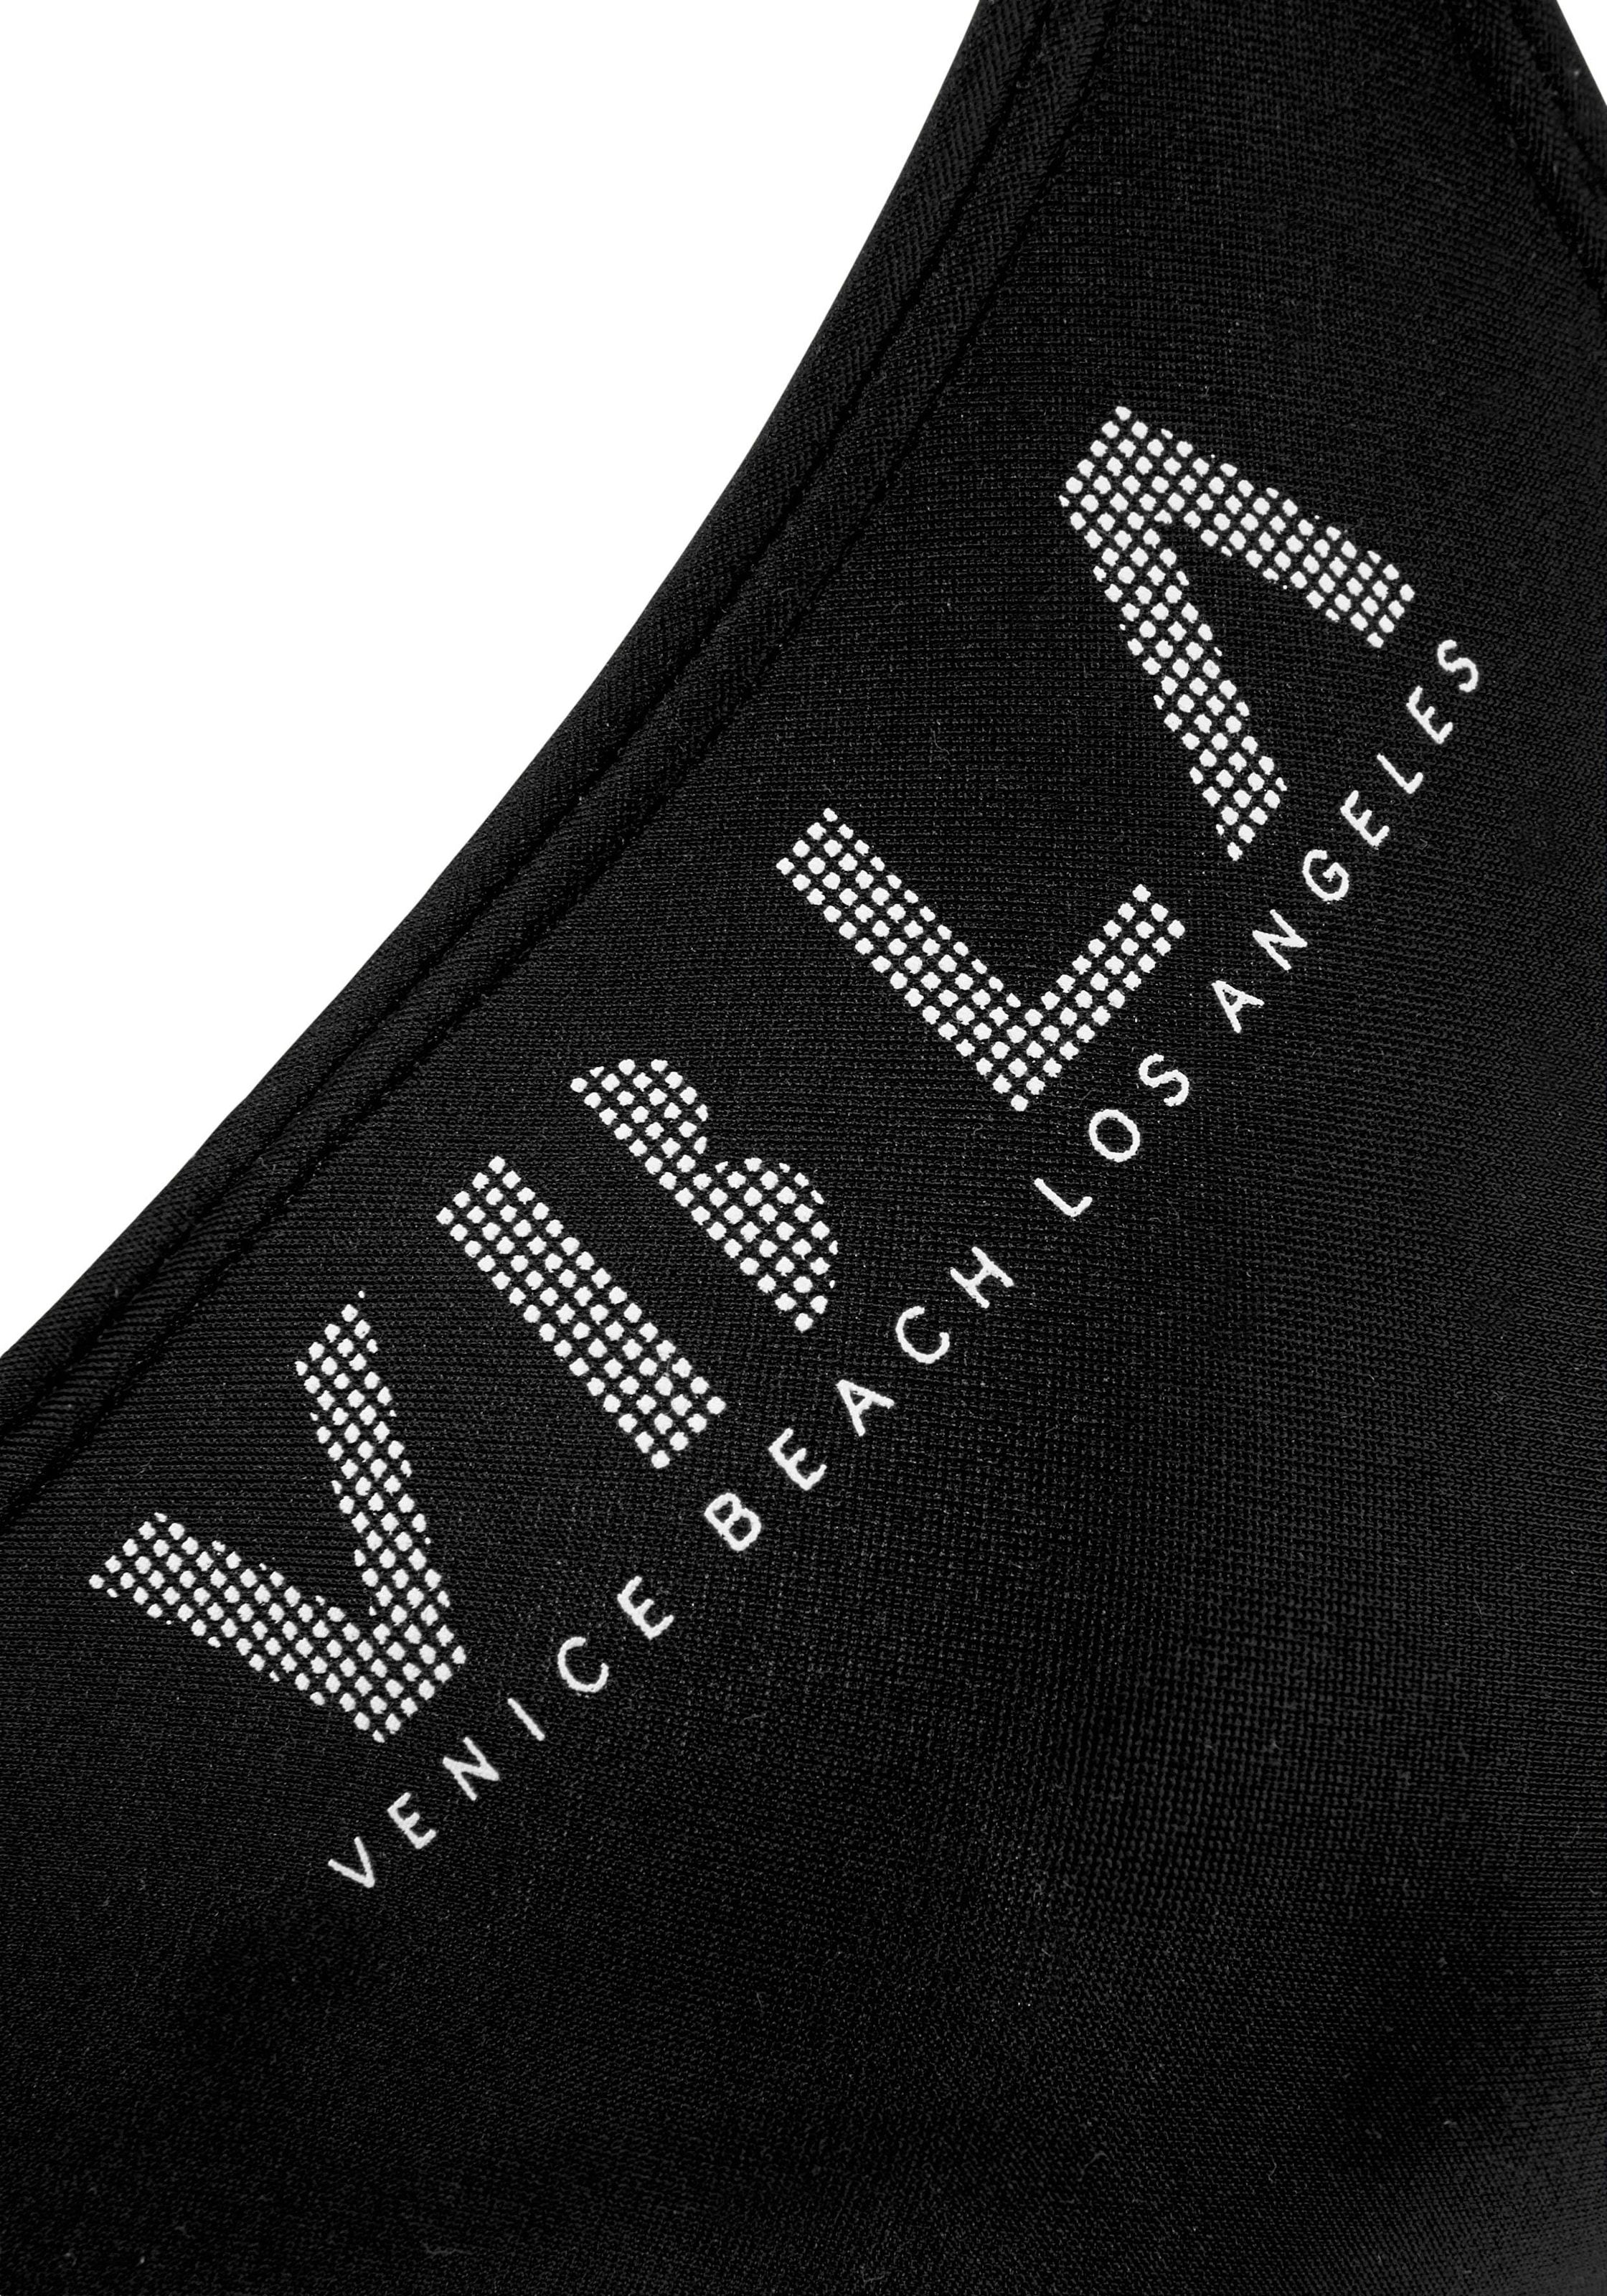 Venice Beach Triangel-Bikini, mit Top zum Wickeln